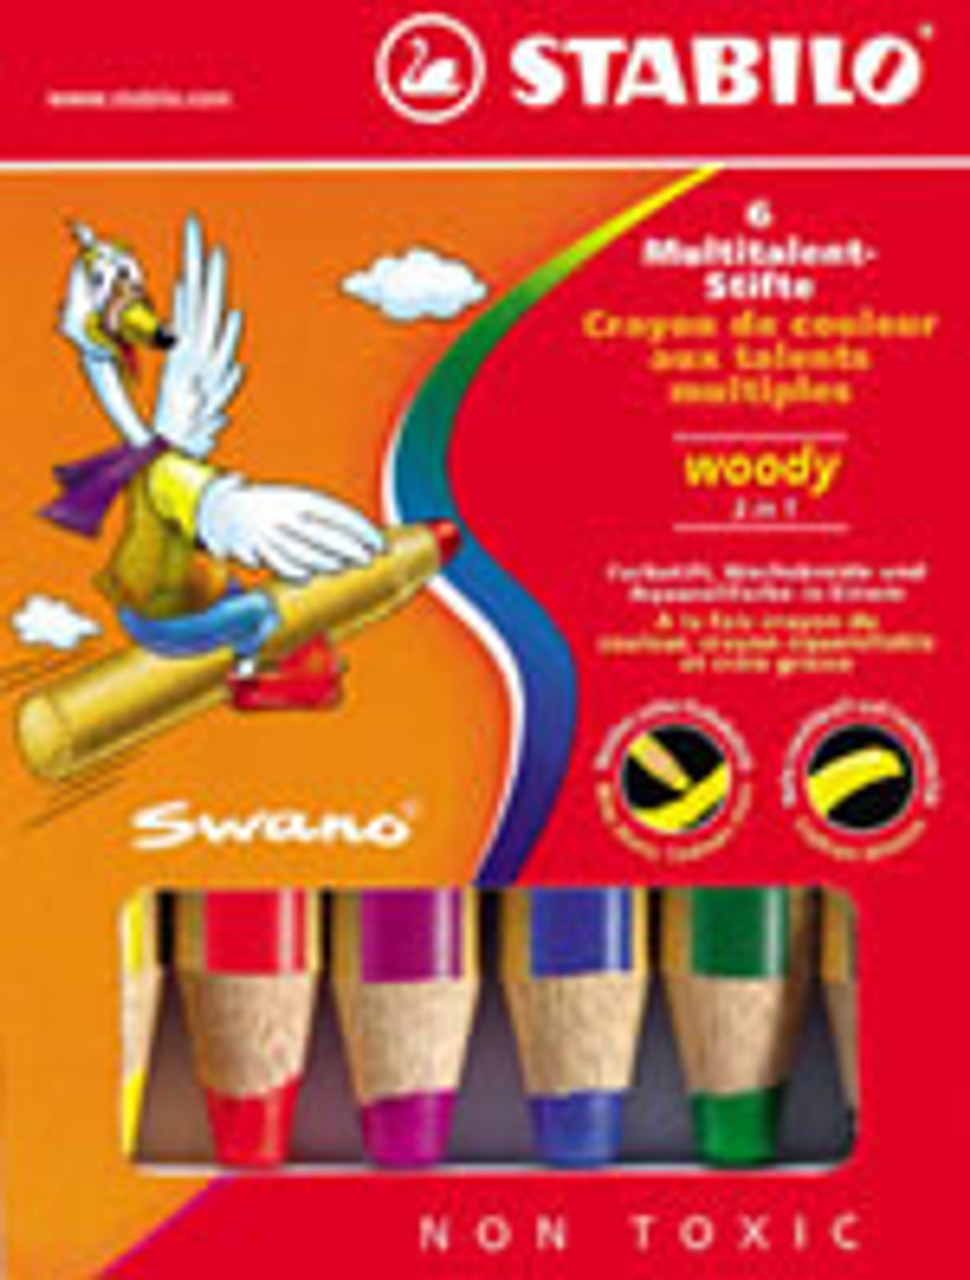 Stabilo Woody 6 Color + Sharpener - Wet Paint Artists' Materials